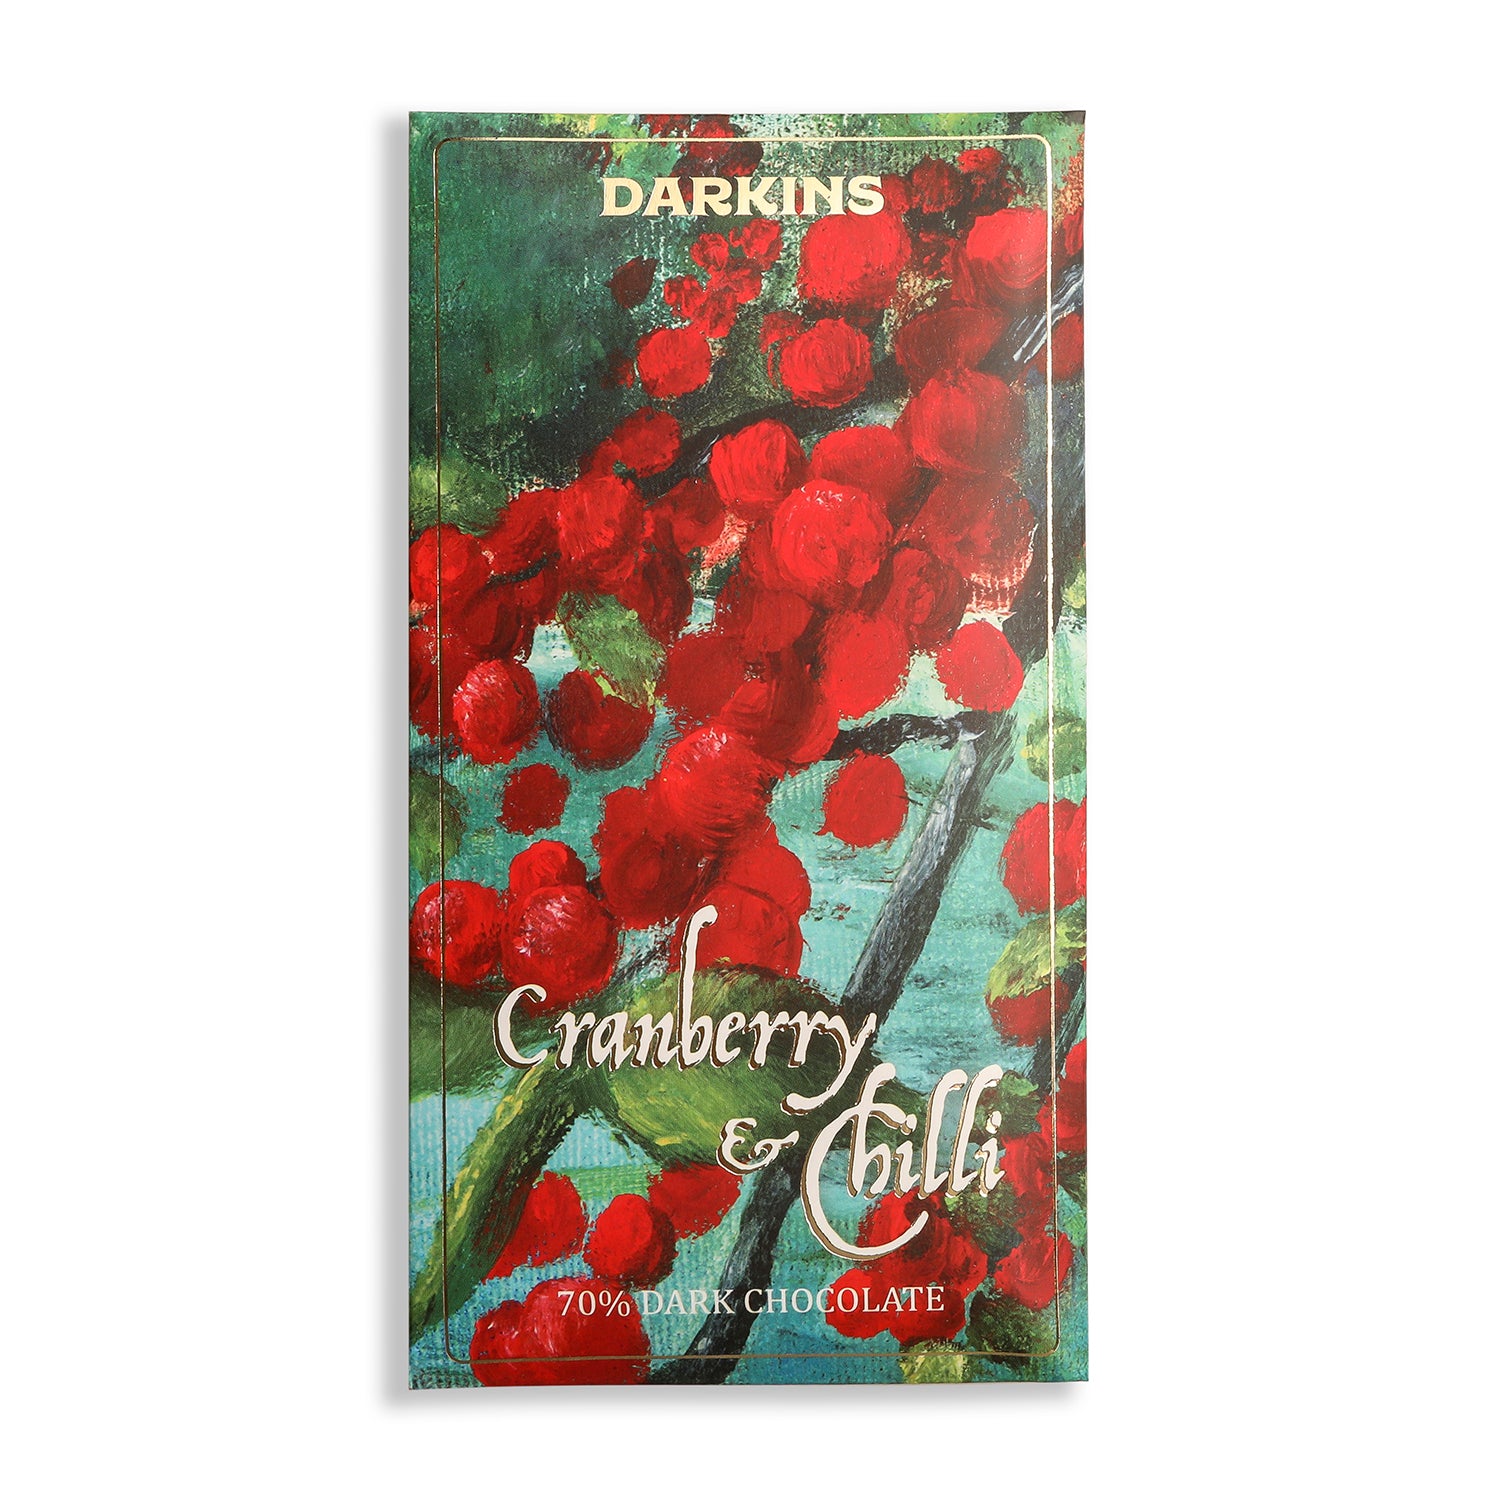 70% Dark Chocolate with Cranberry & Chilli - Darkins Chocolates